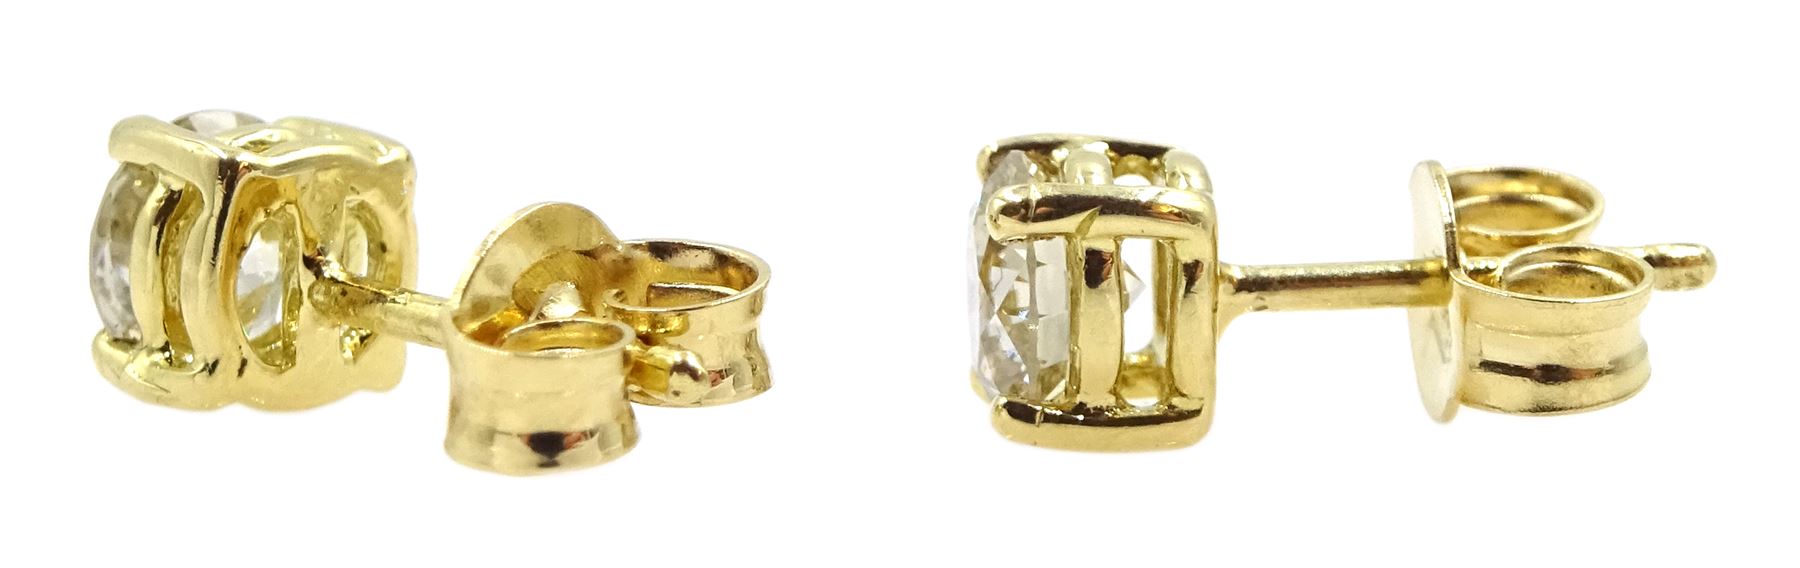 Pair of 18ct gold diamond stud earrings - Image 4 of 6